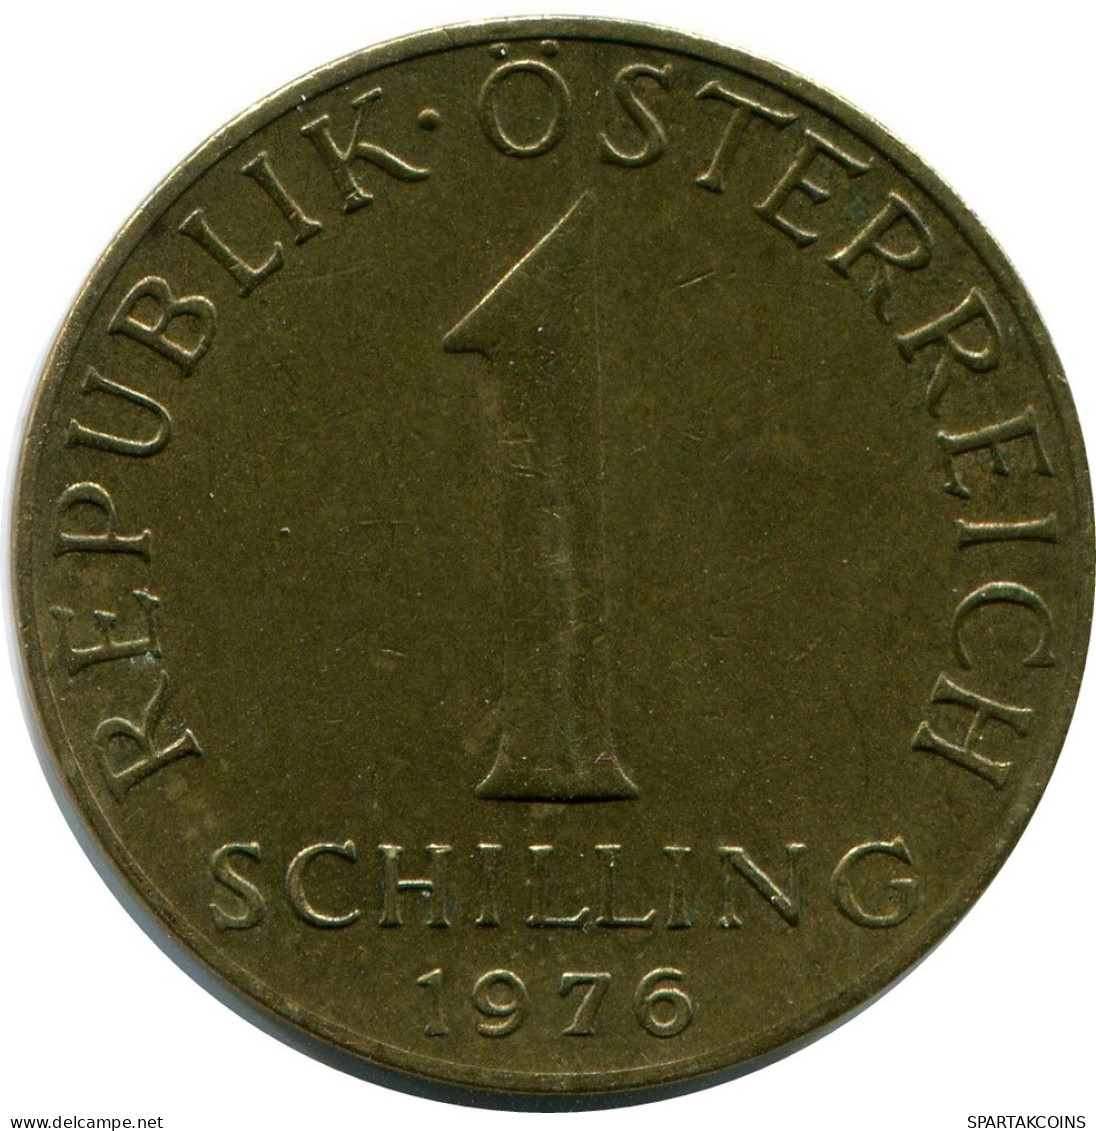 1 SCHILLING 1976 AUSTRIA Coin #AW811.U.A - Austria